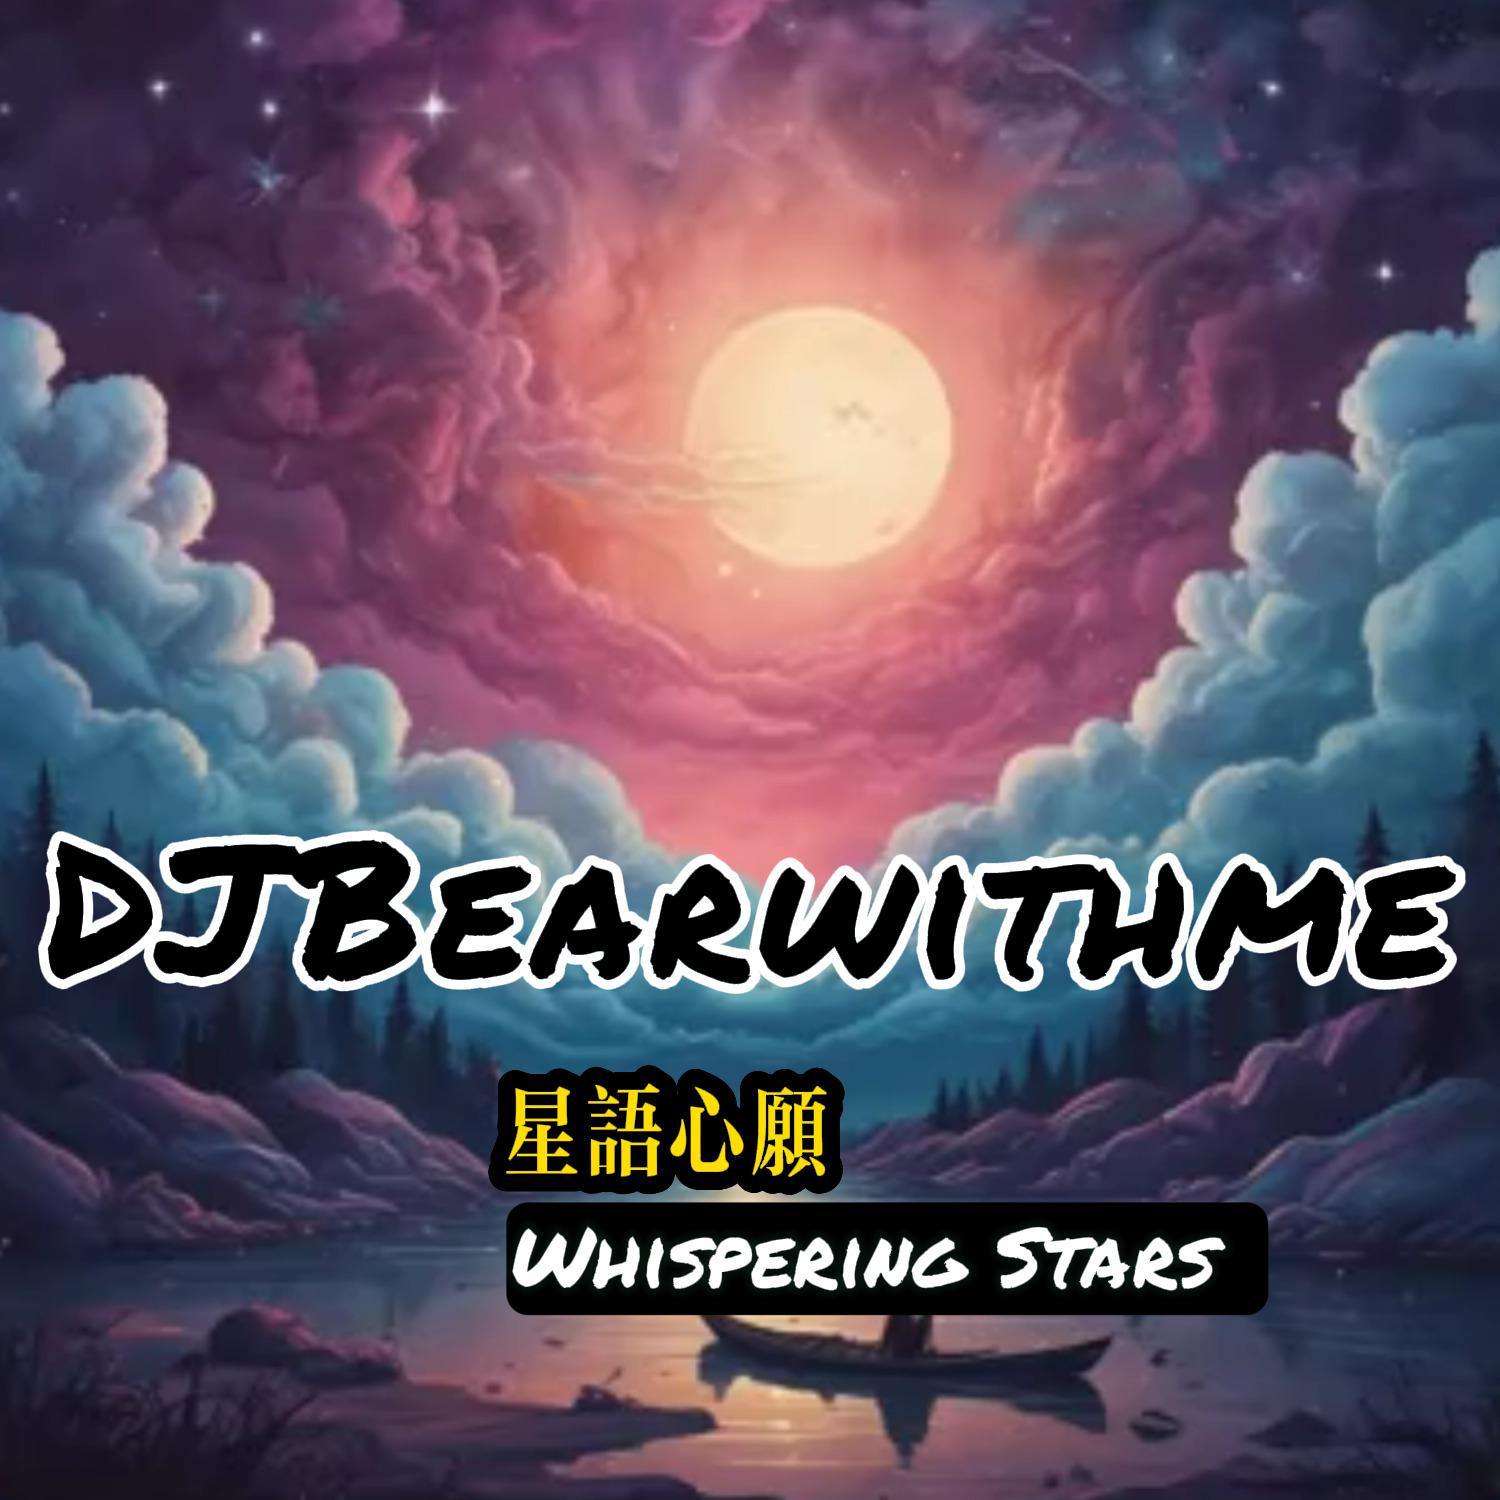 DJBearwithme - 星语心愿 Whispering Stars (Instrumental)